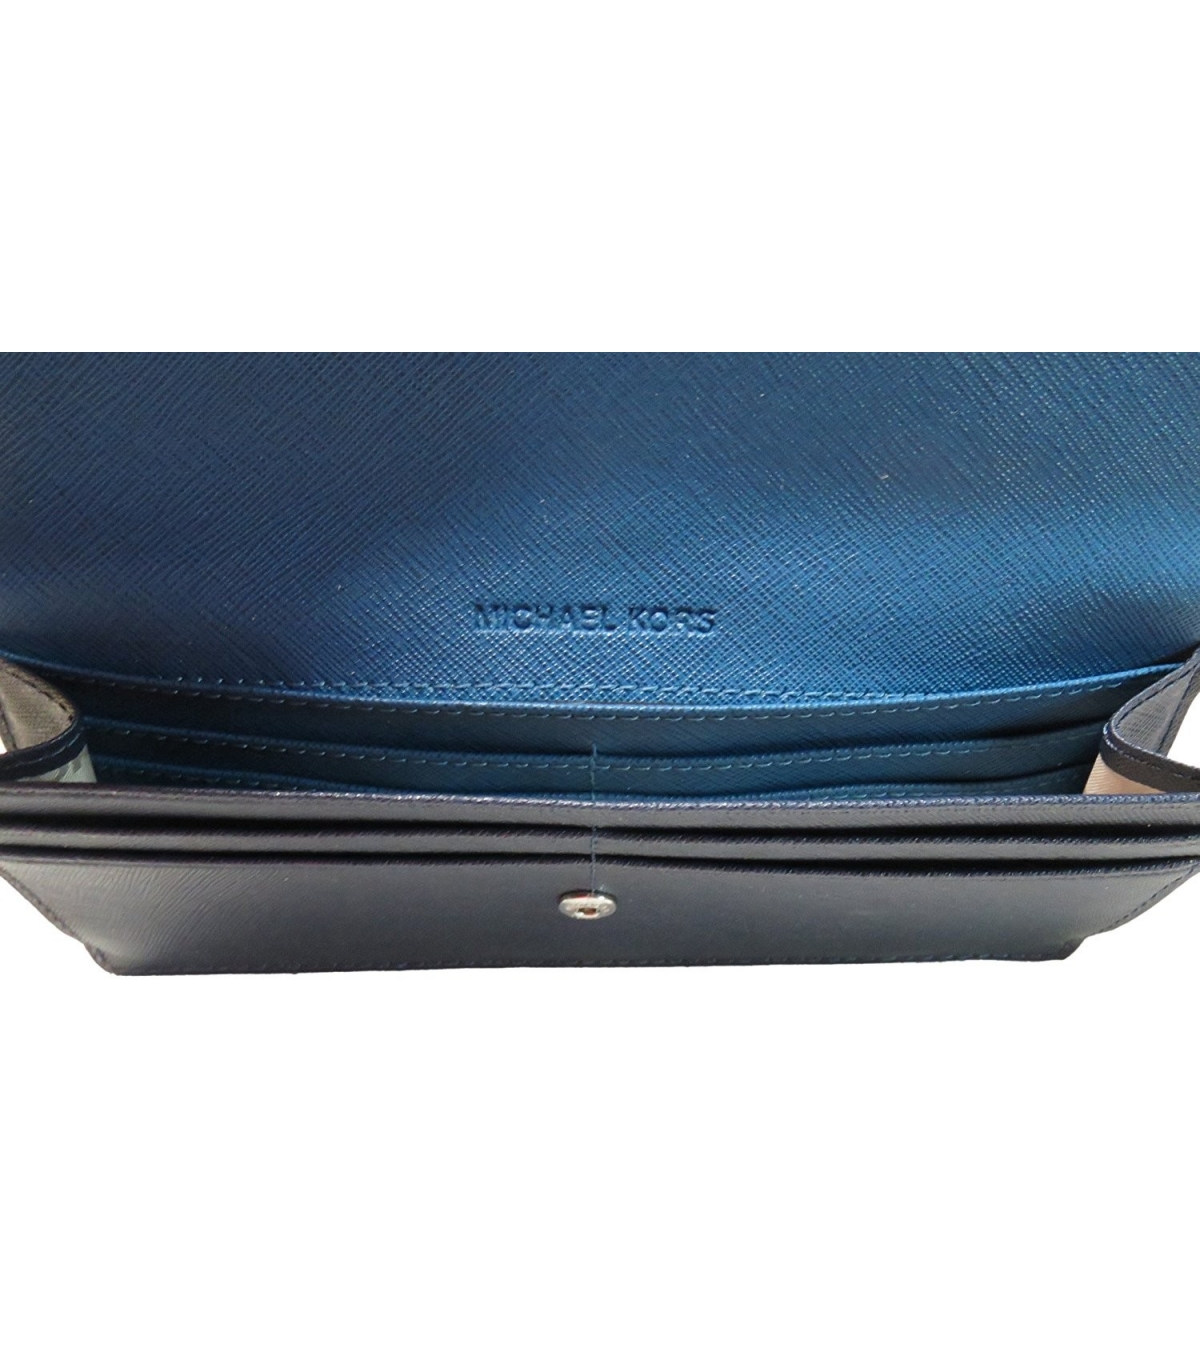 Michael Kors Navy Blue Saffiano Leather Jet Set Travel Flat Wallet